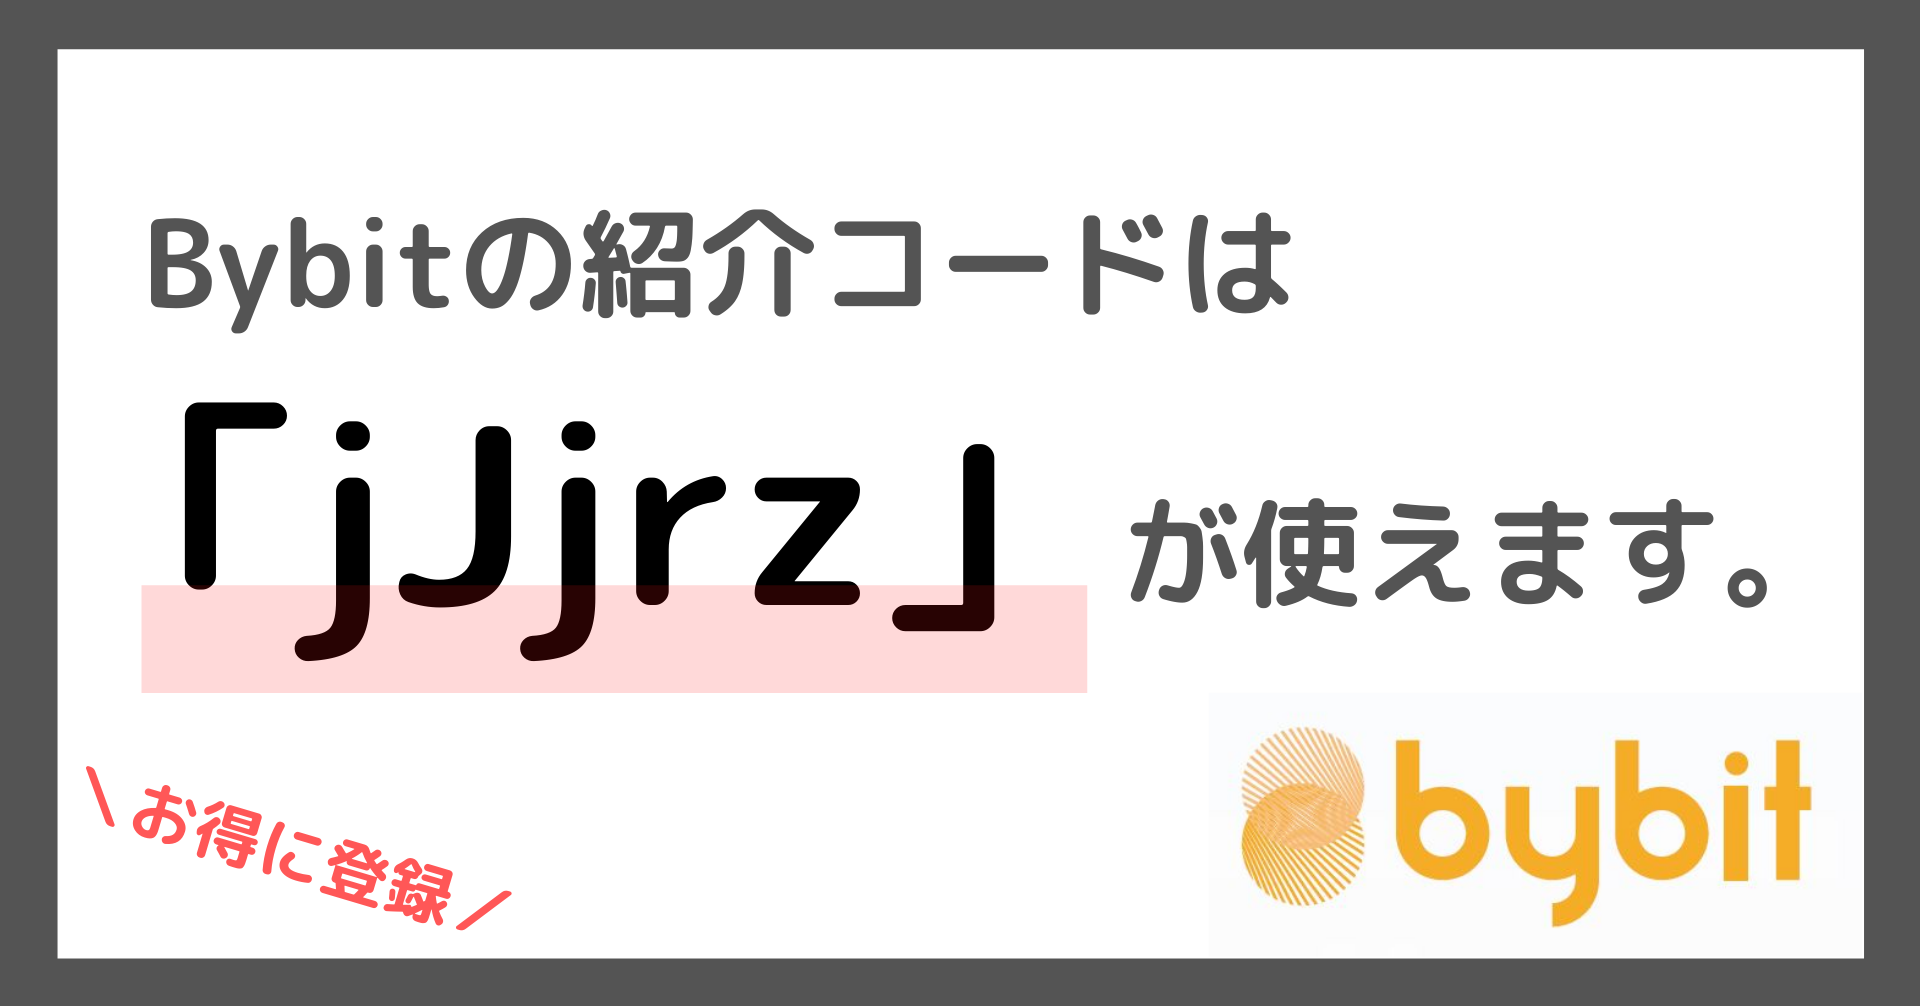 Bybitの紹介コードは「jJjrz」